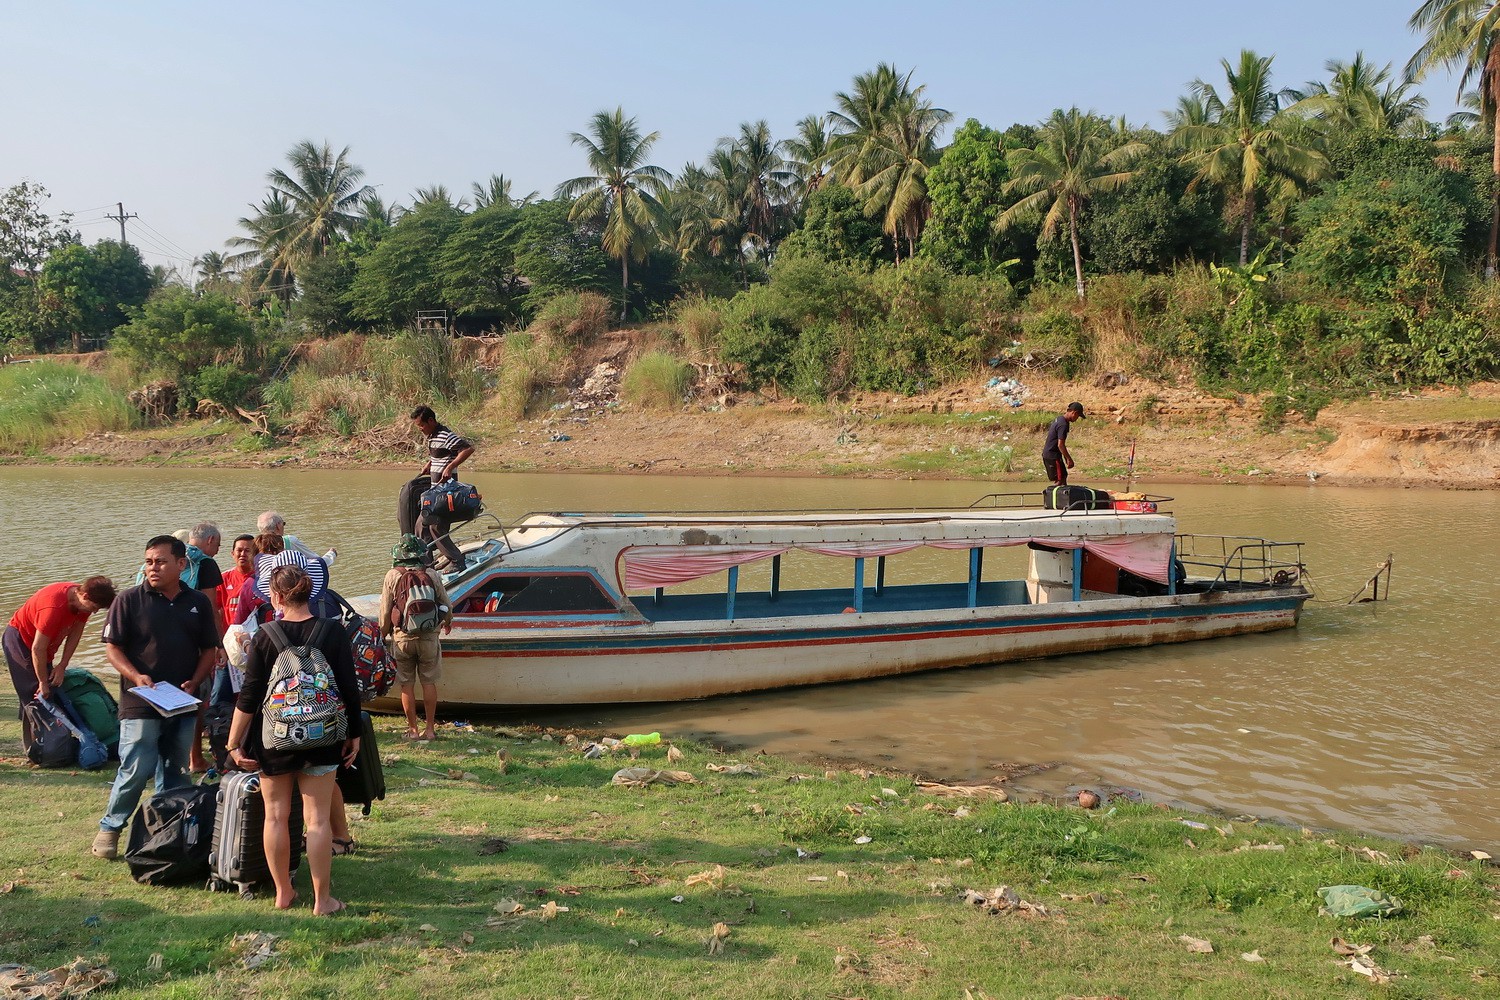 End of our boat trip 20 kilometers ahead of Battambang